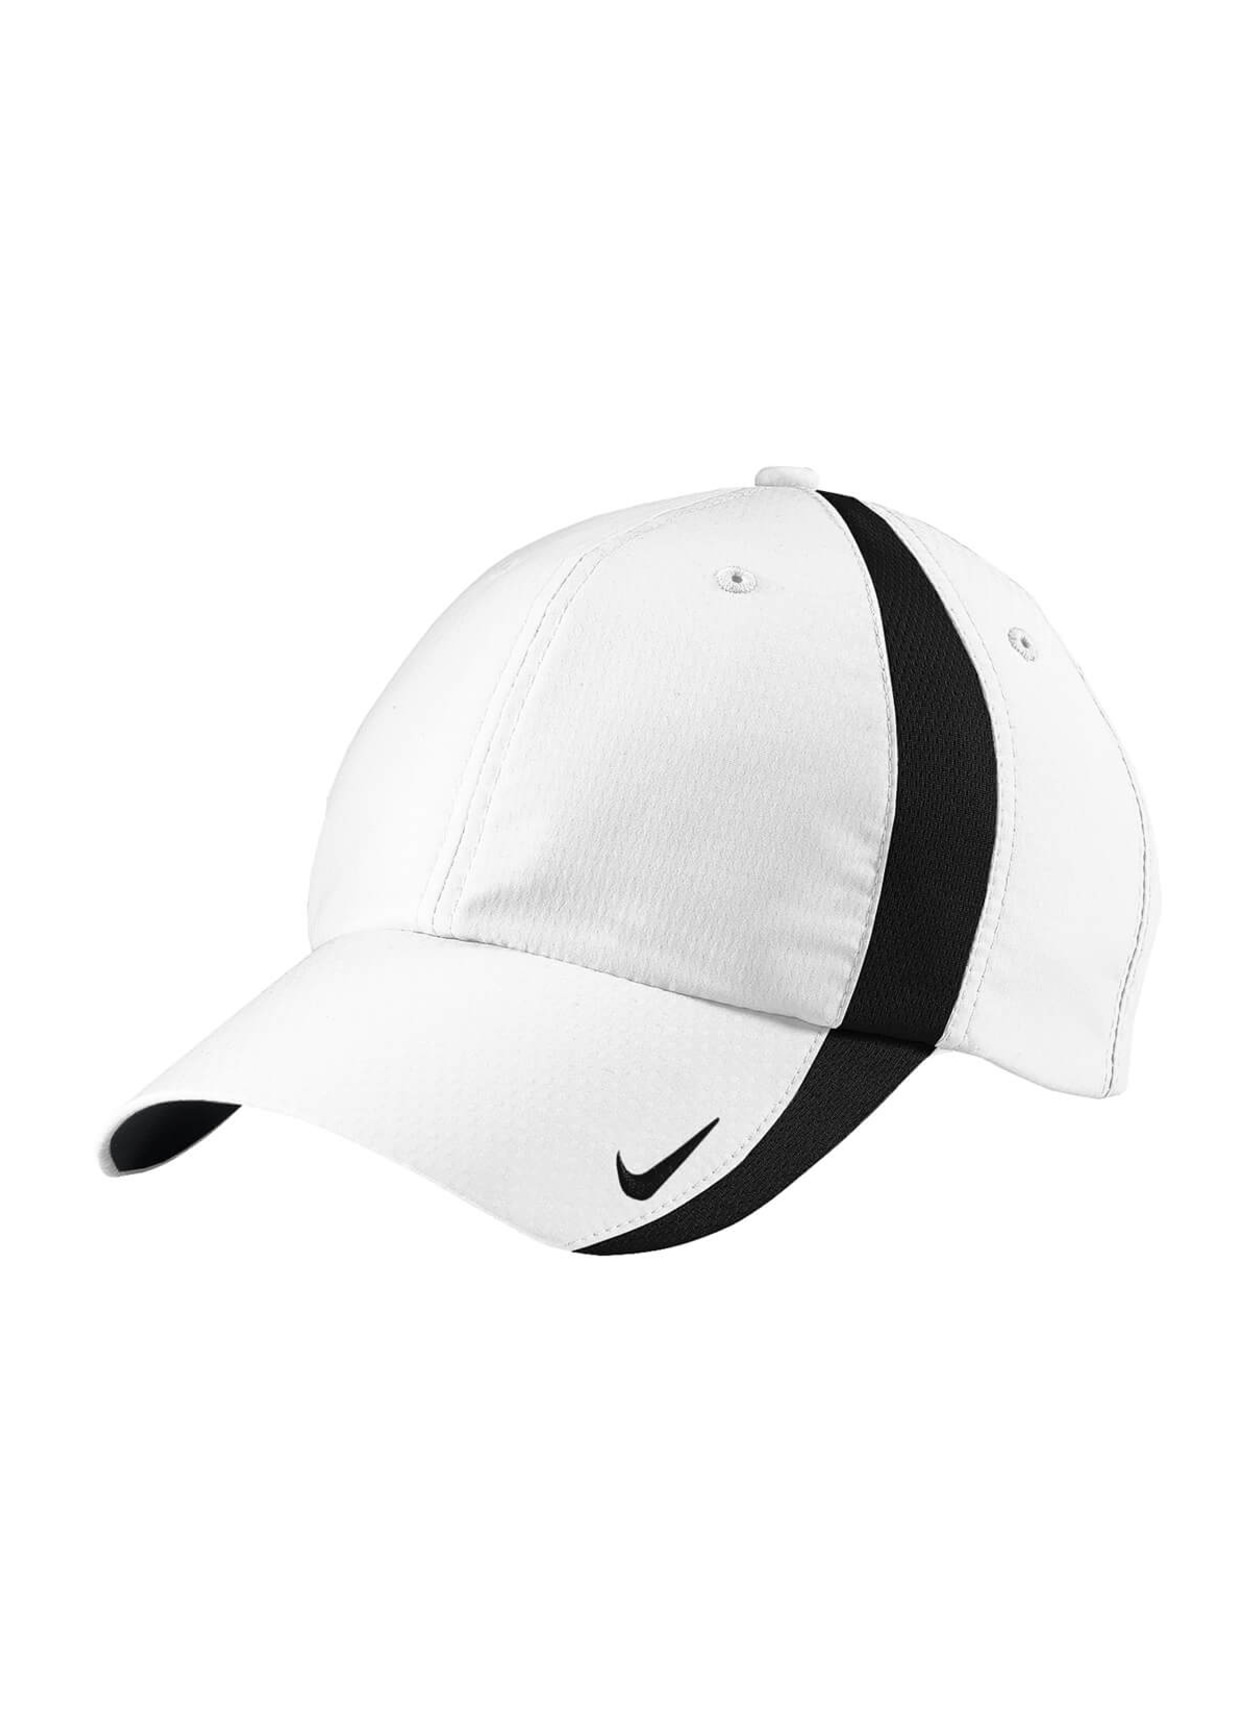 White / Black Nike Sphere Dry Hat | Nike